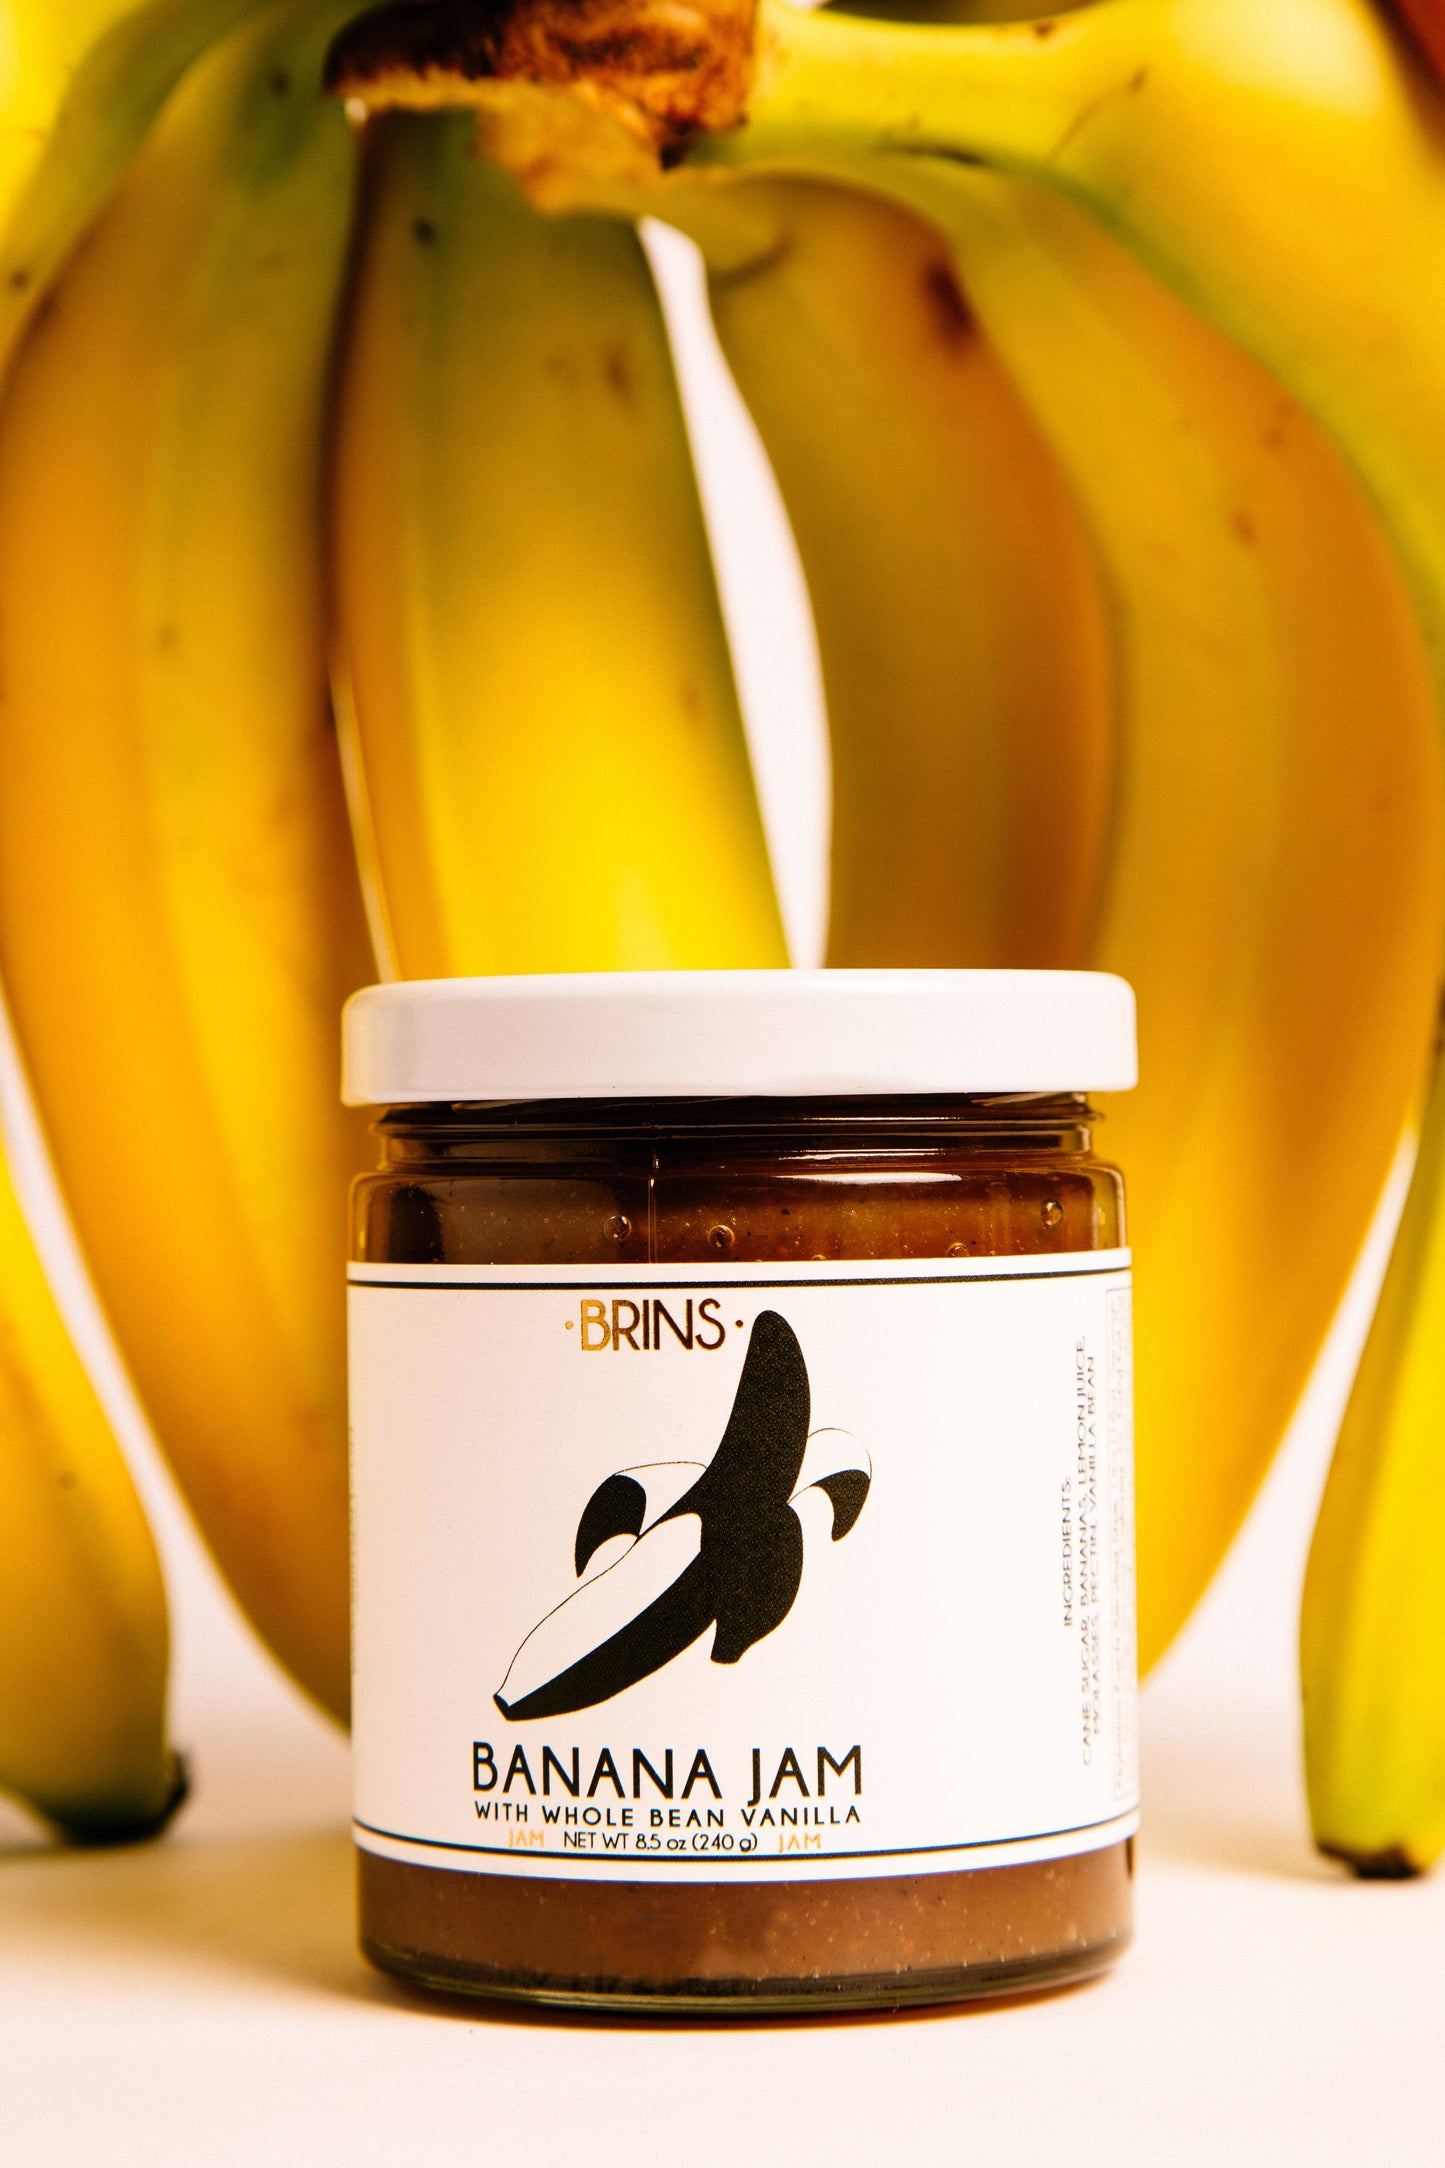 BRINS - Banana Jam Spread